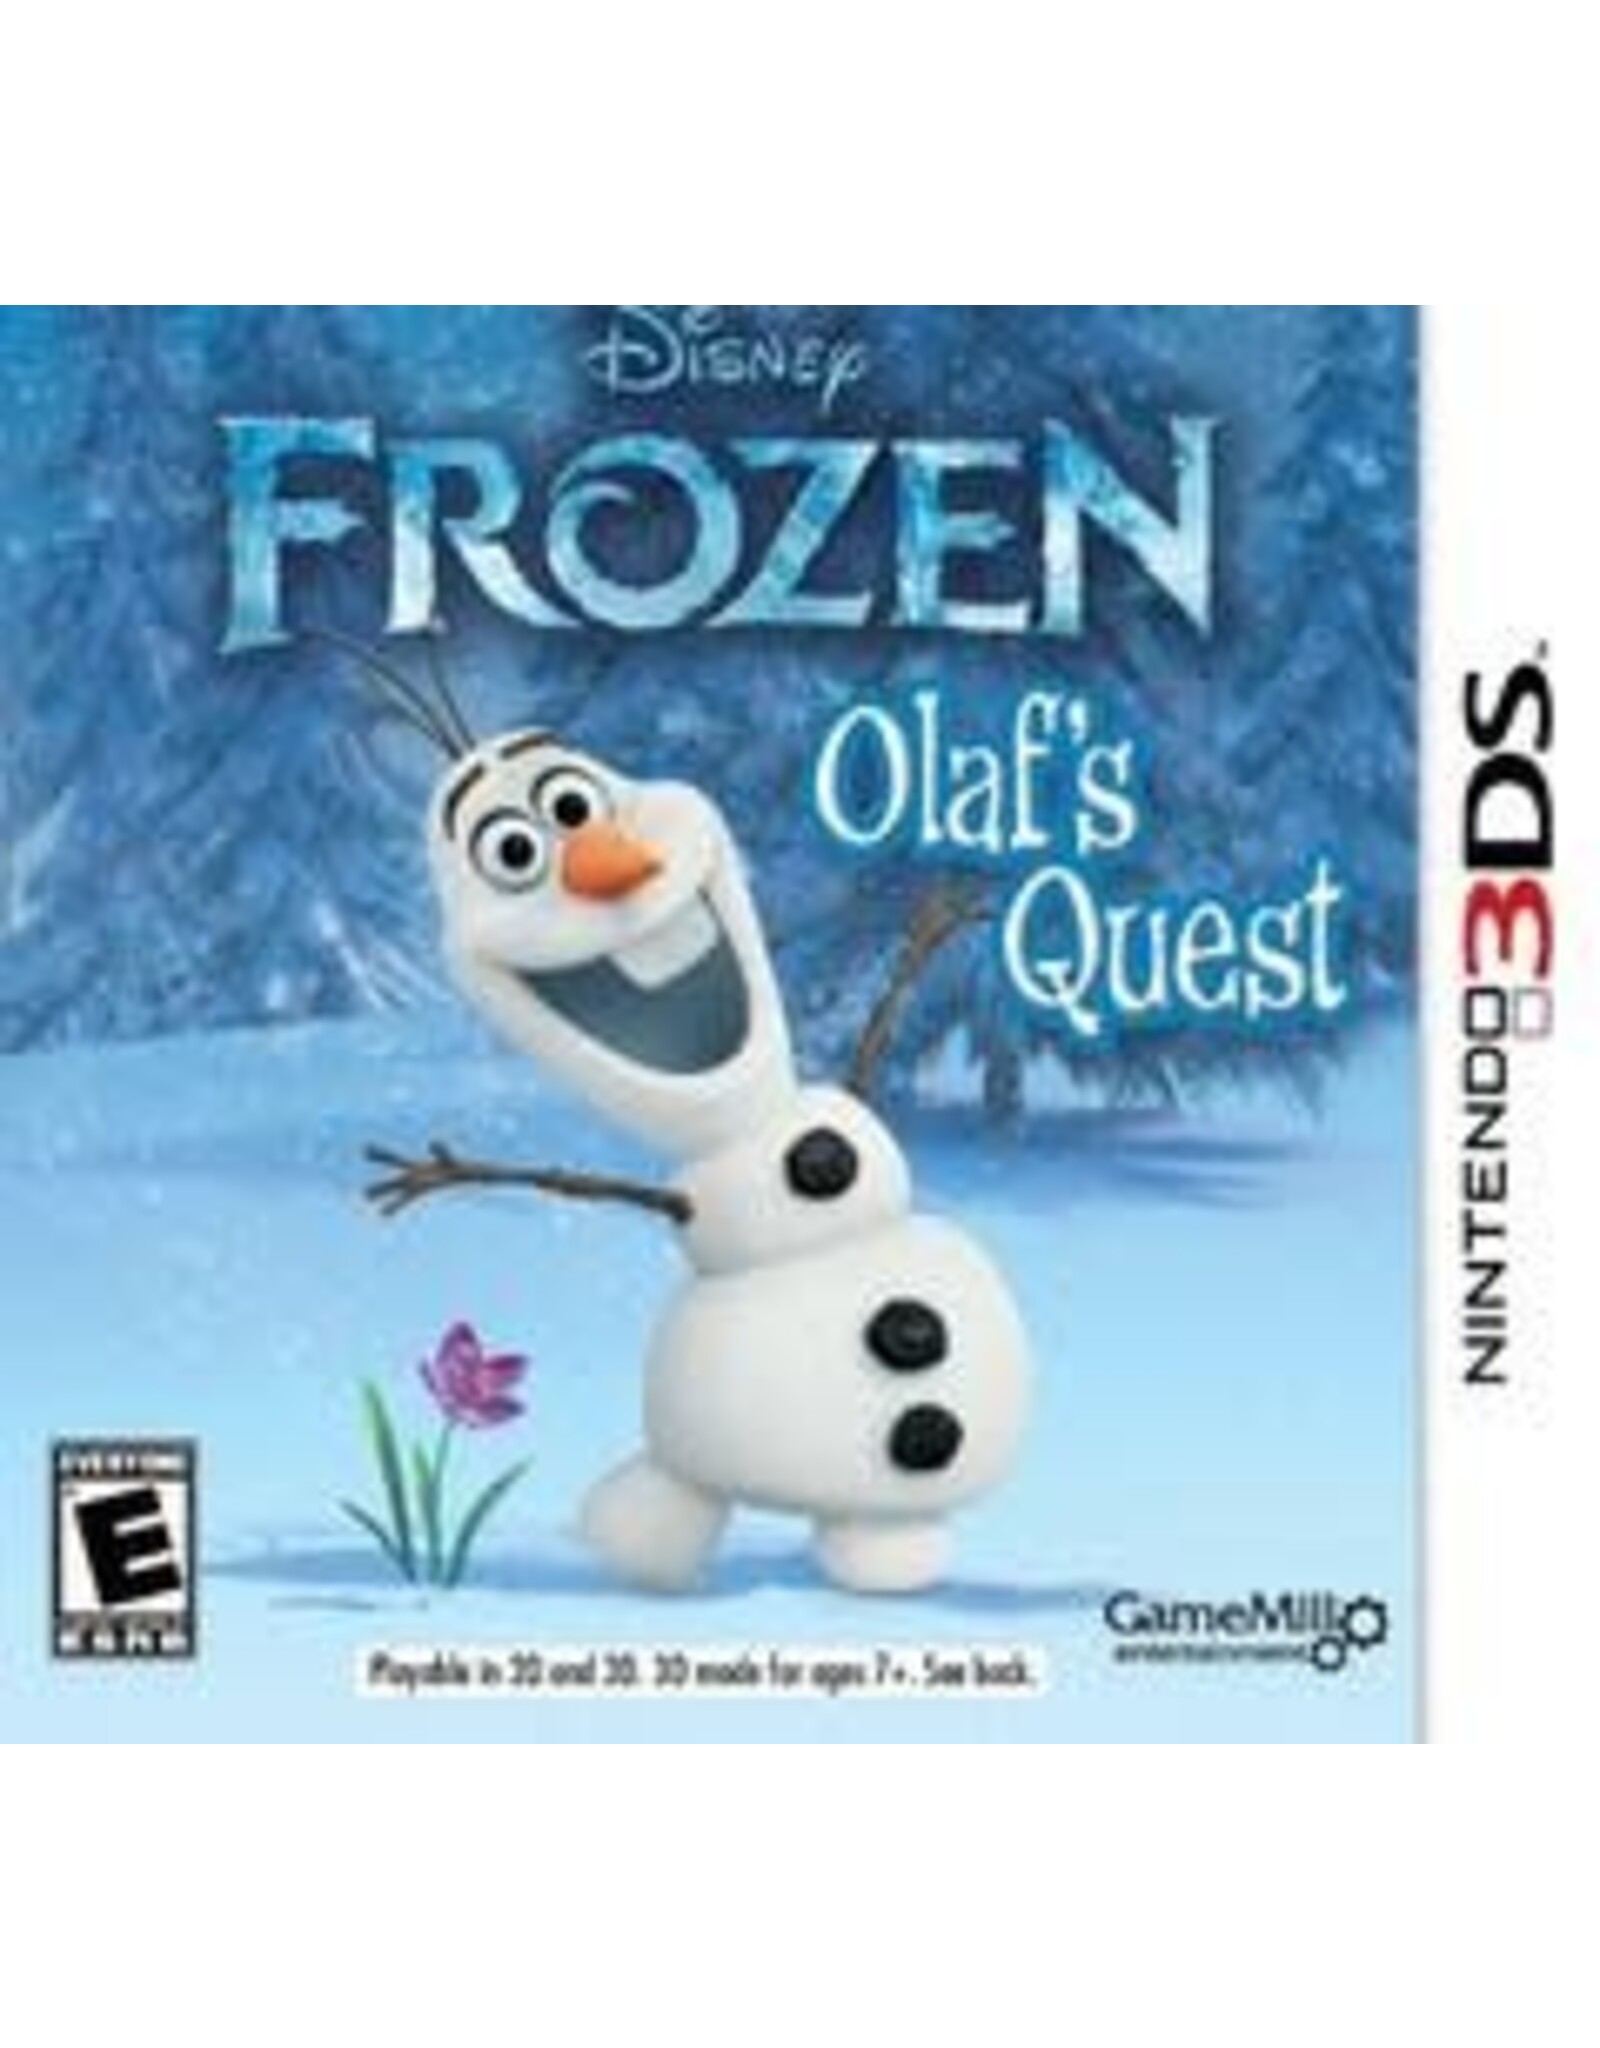 Nintendo 3DS Frozen: Olaf's Quest (CiB)